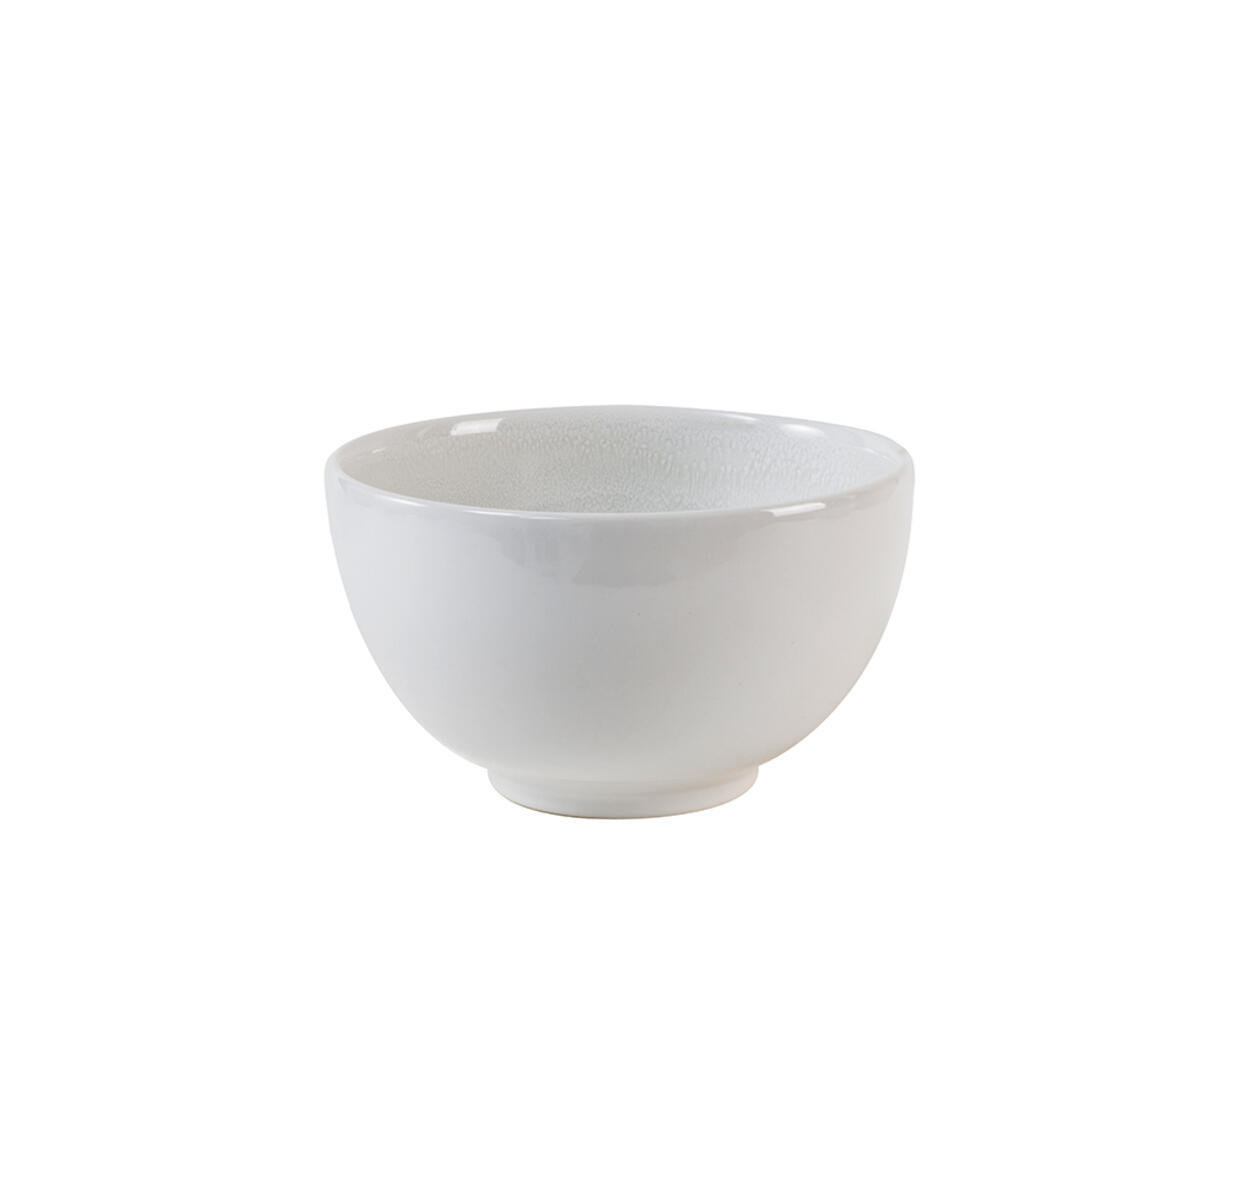 bowl m tourron neige ceramic manufacturer